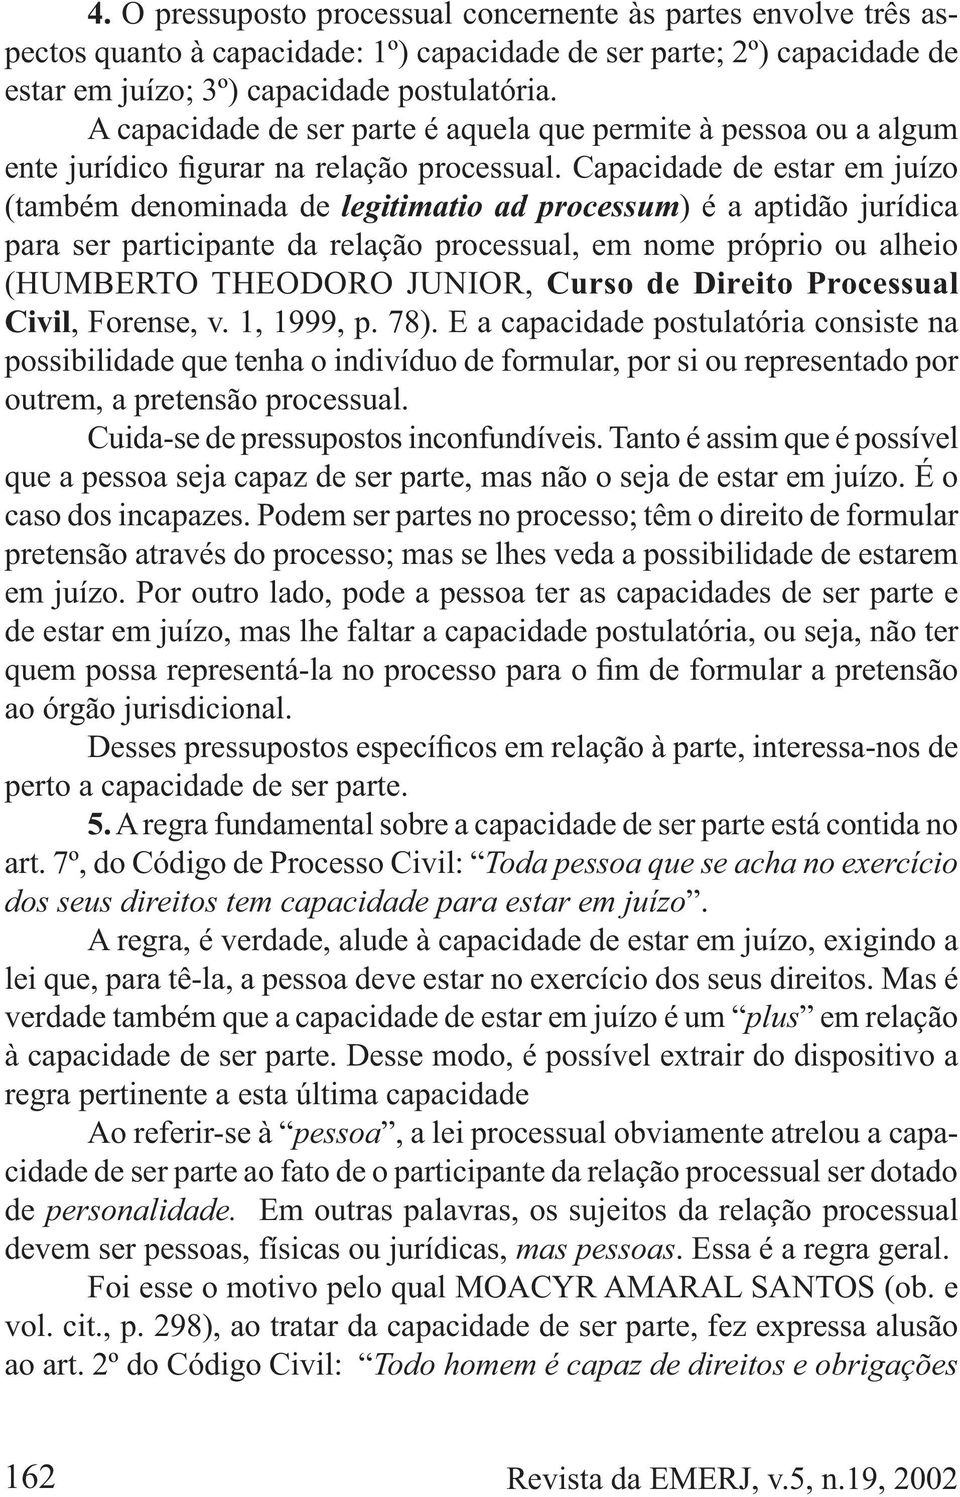 alheio (HUMBERTO THEODORO JUNIOR, Curso de Direito Processual Civil, Forense, v. 1, 1999, p. 78).